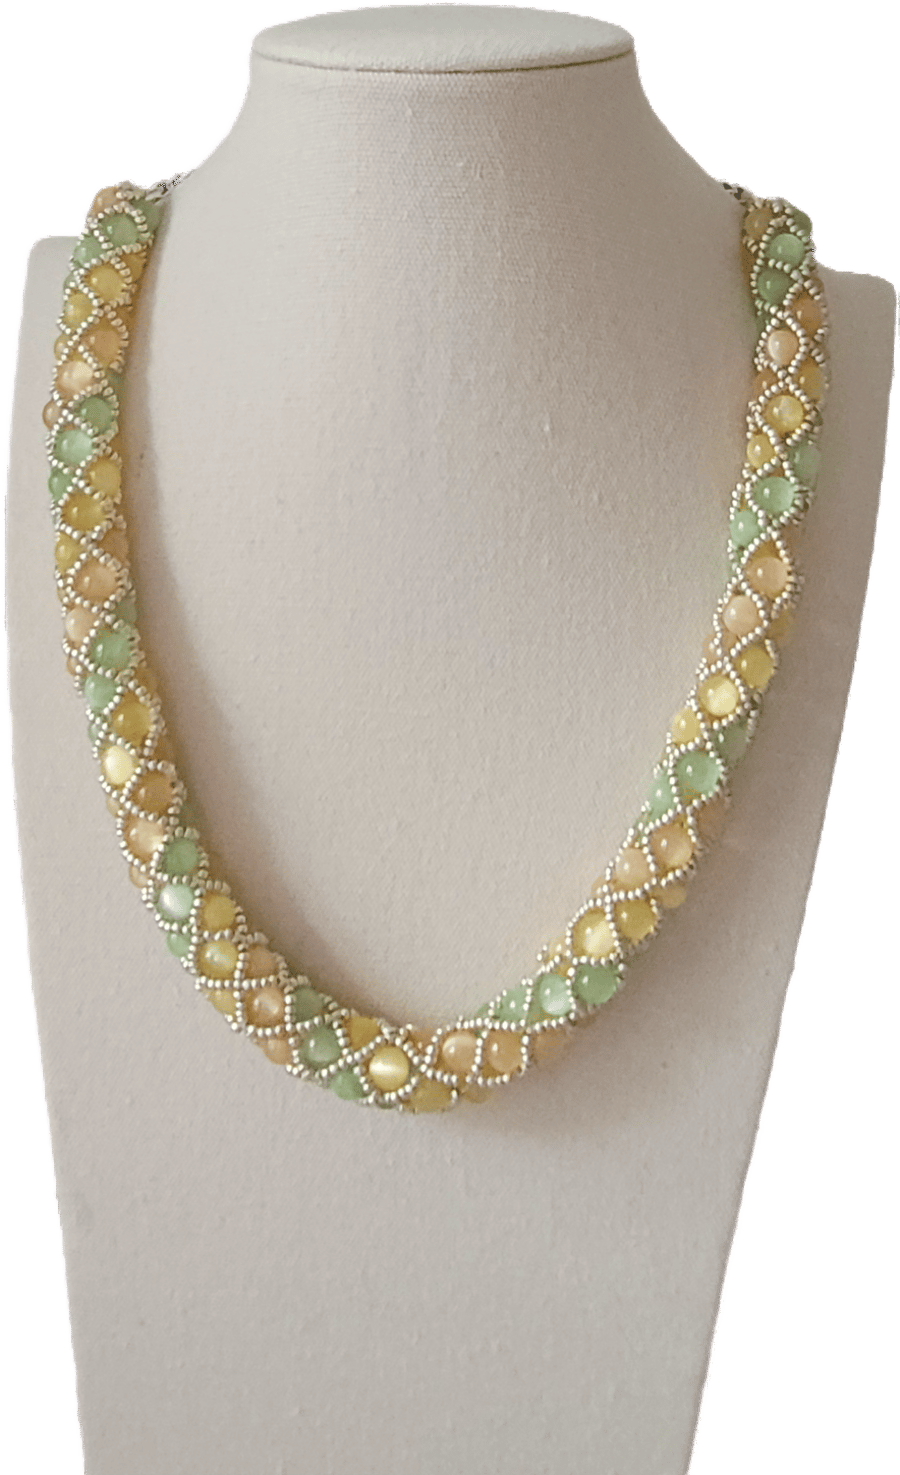 Necklace of genuine gemstones 